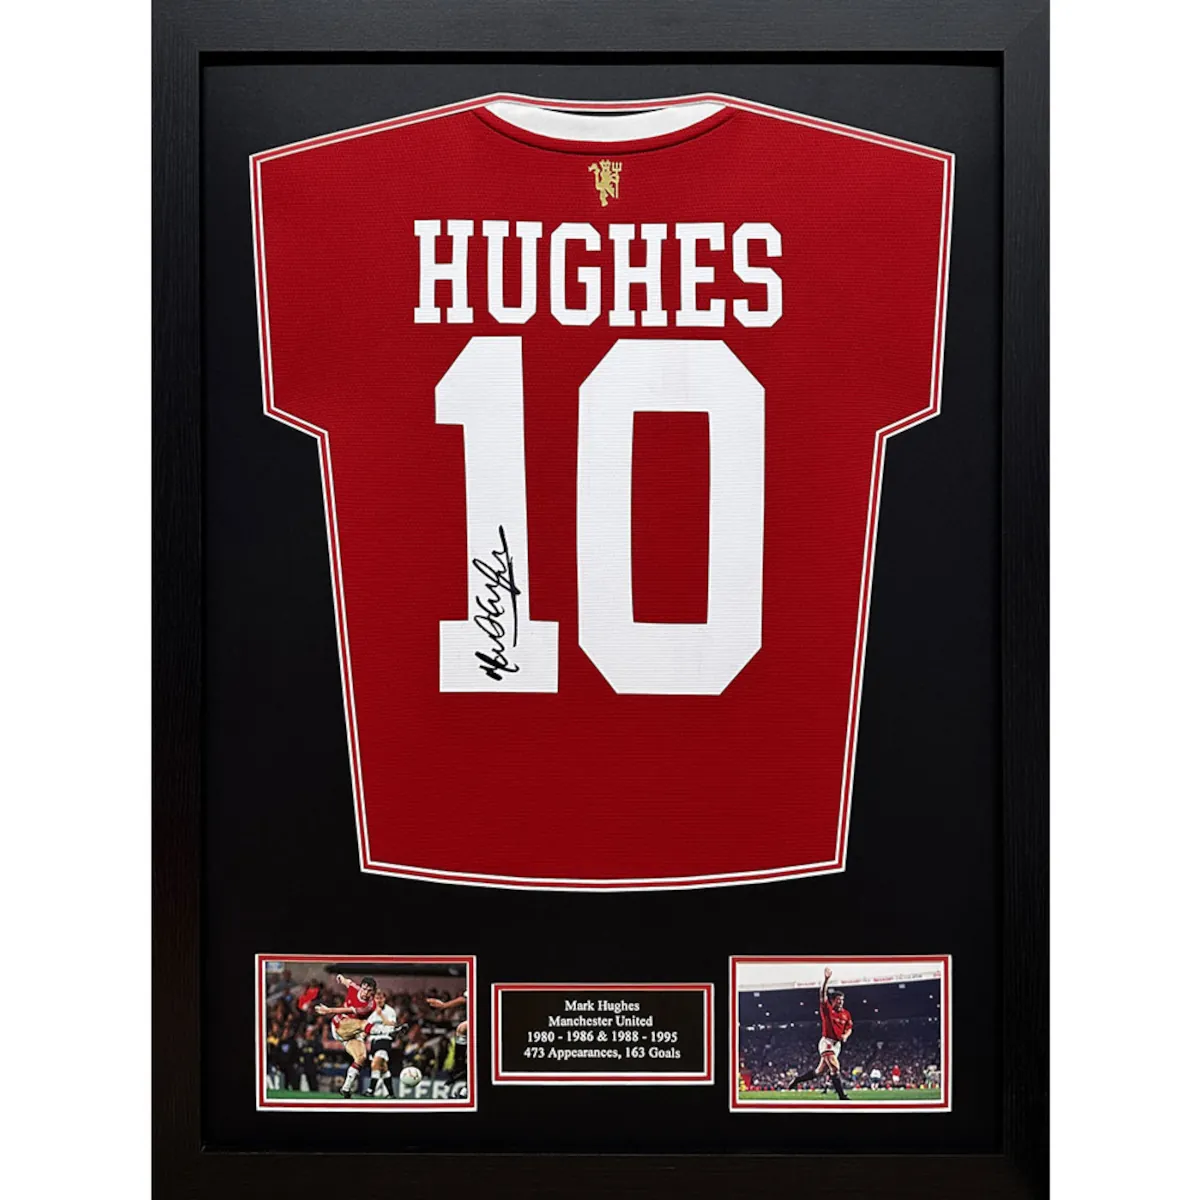 TM-04984 Manchester United F.C. Mark Hughes Framed Signed 1985 Replica Football Shirt